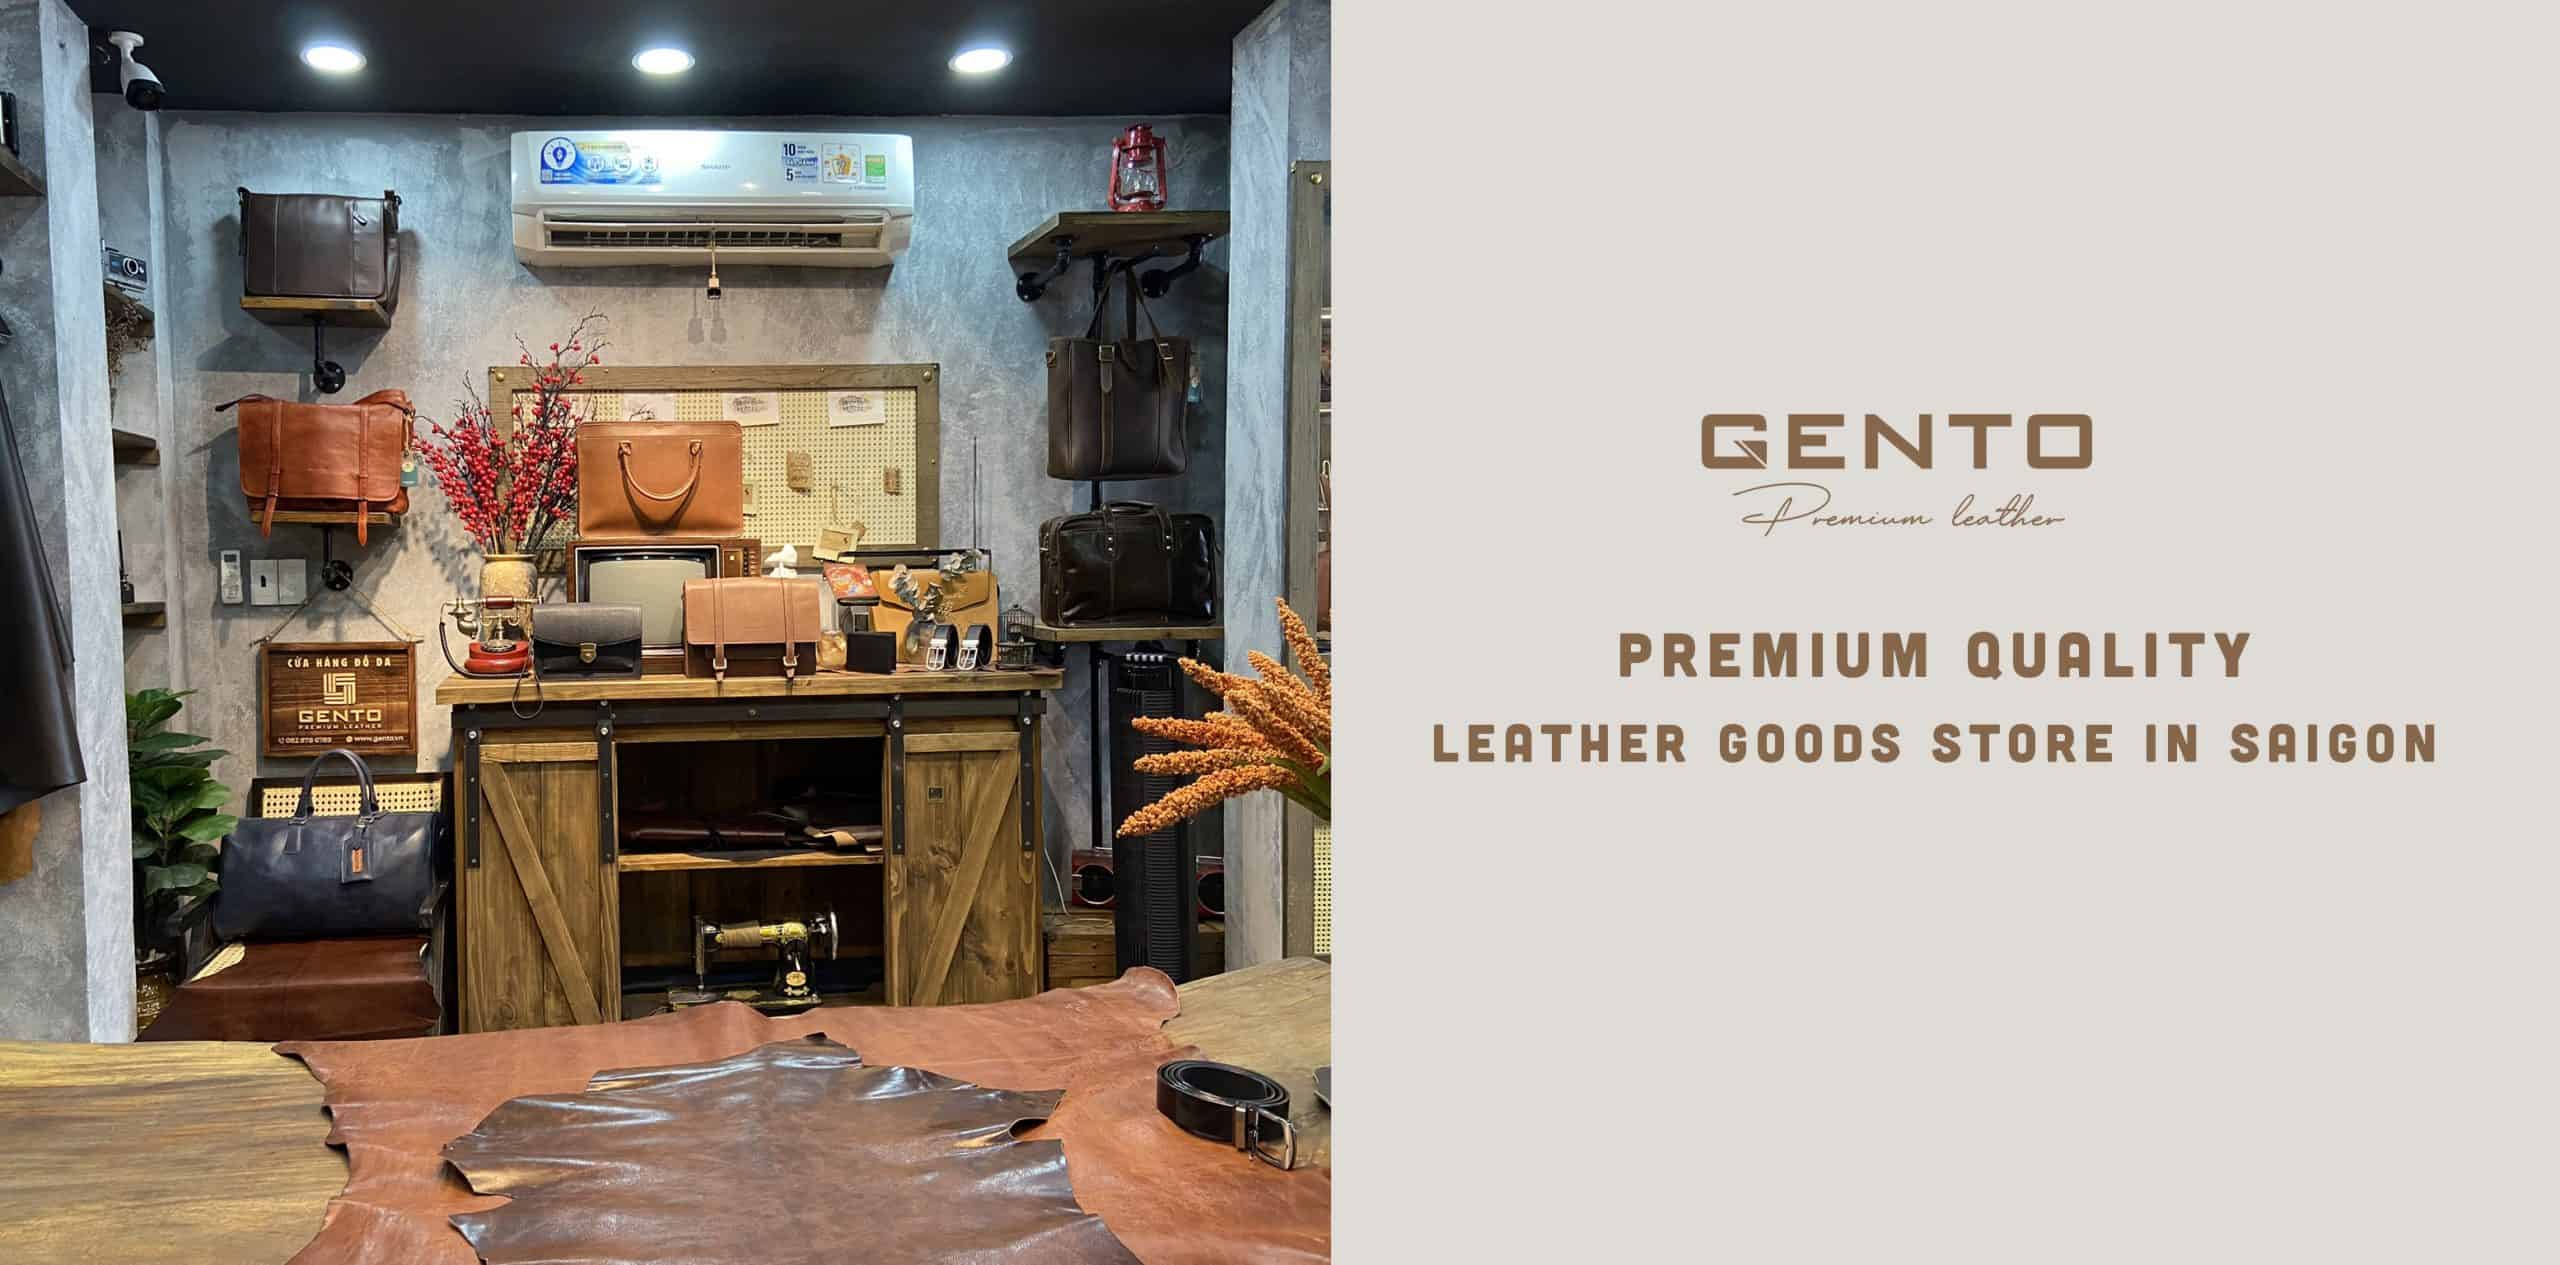 Premium quality Leather Goods Store in Saigon